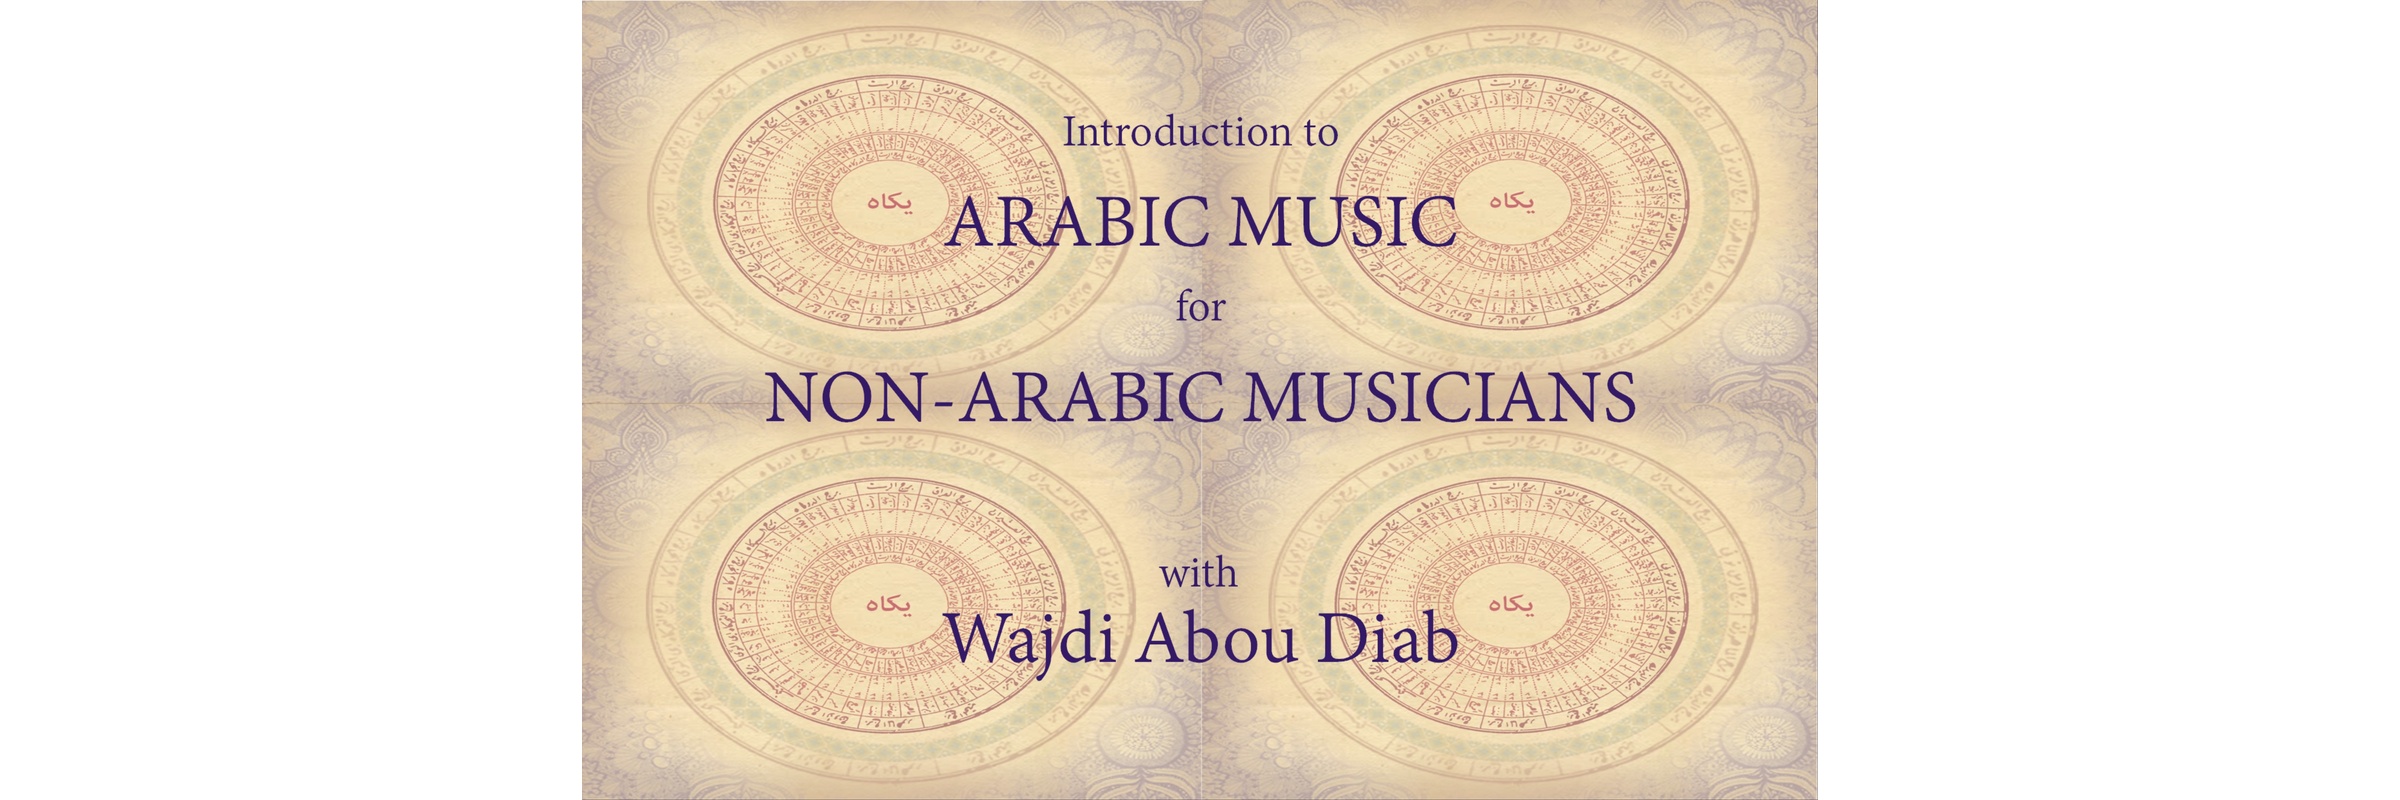 Wajdi AbouDiab - Introduction to ARABIC MUSIC for NON-ARABIC musicians